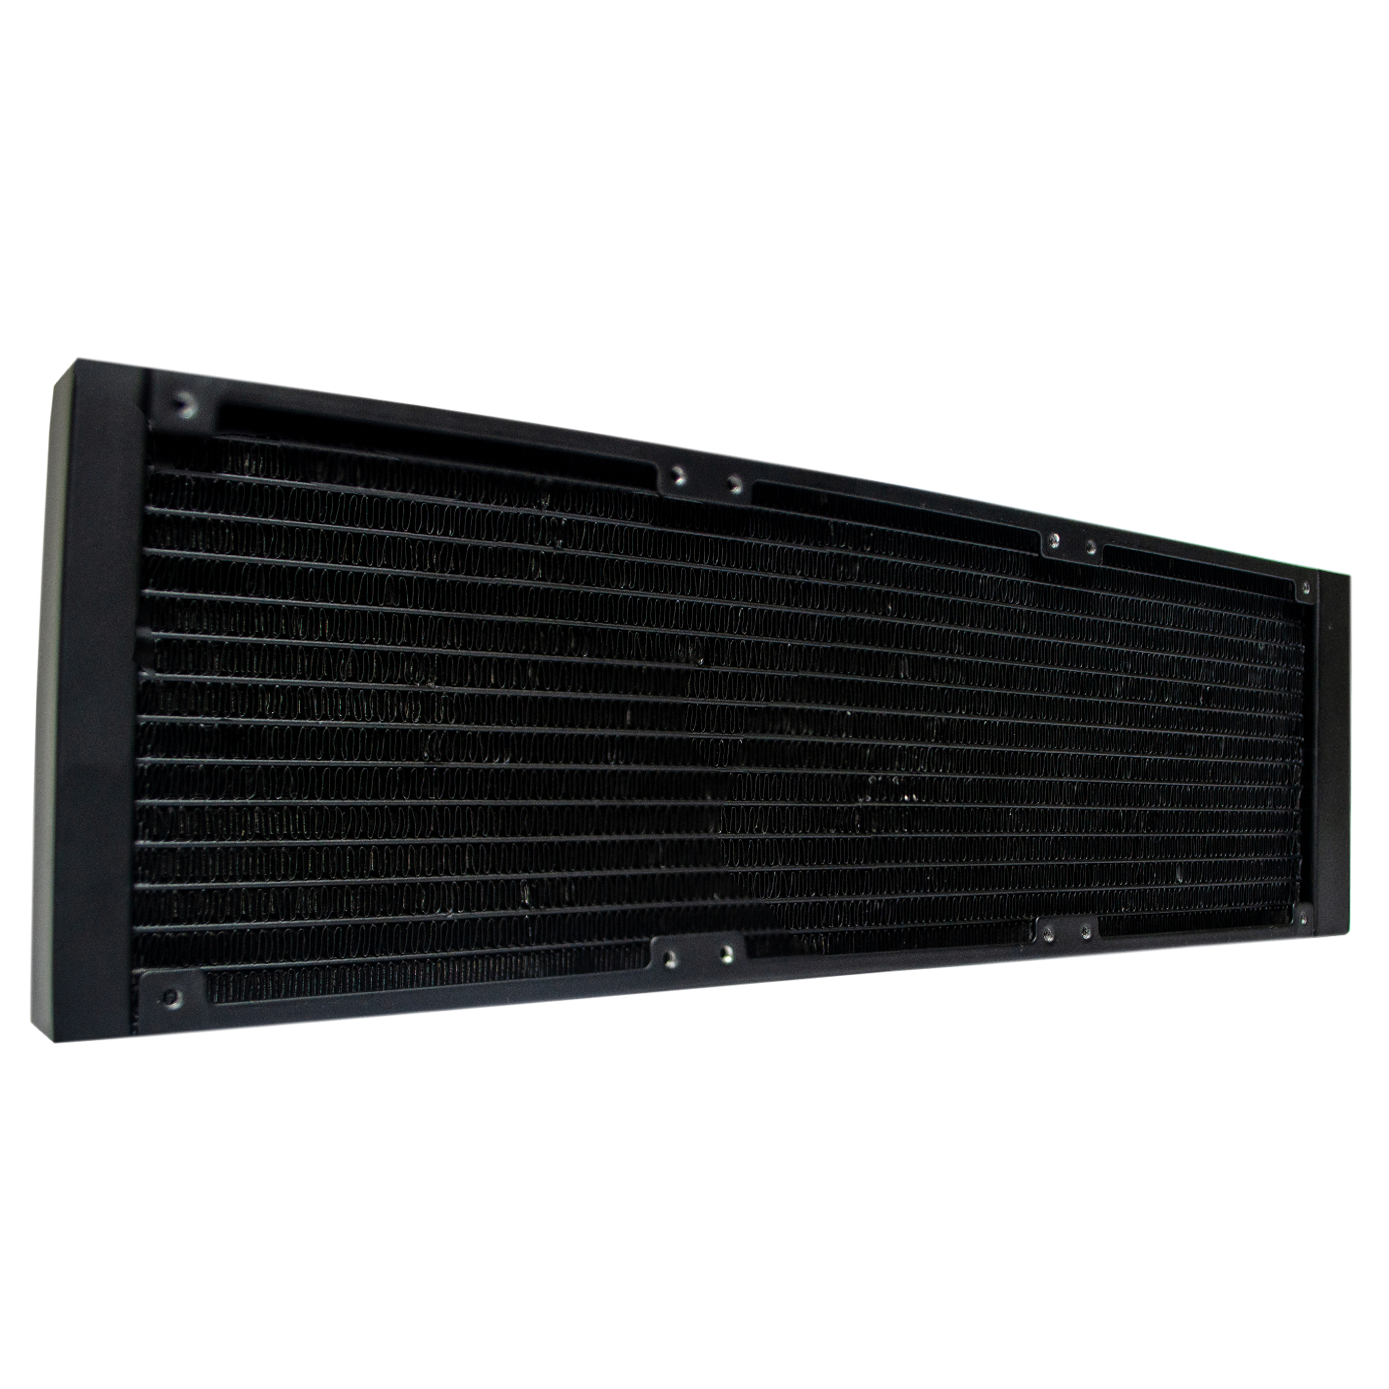 Digifast AIO Notos N36 Liquid CPU Cooler, N36, 360mm  Radiator, ARGB Heatsink, Pump and Fans, Sync Lighting for major motherboards